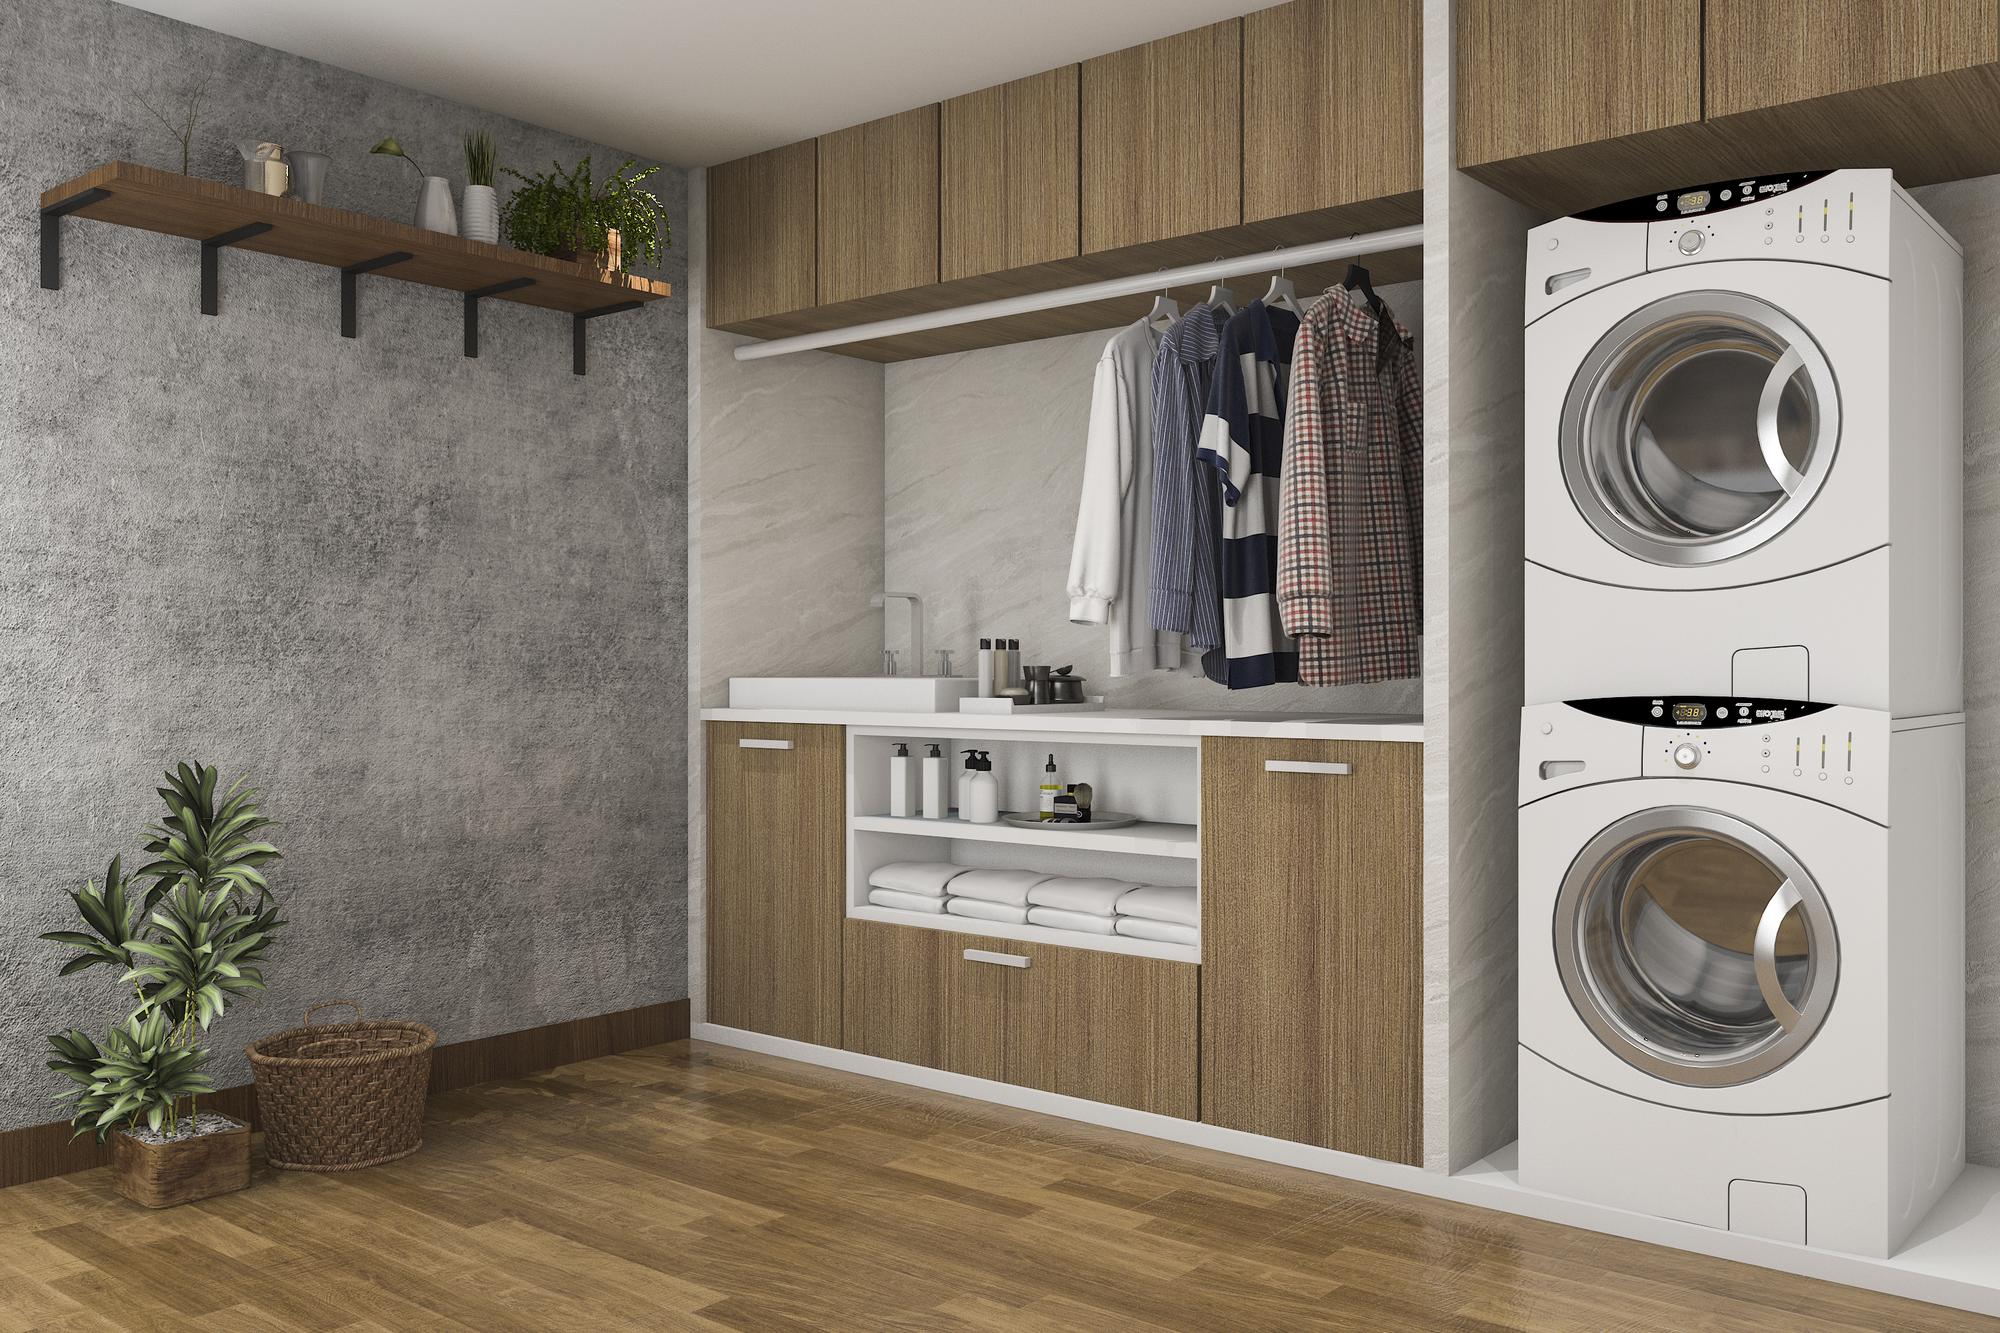 Laundry room designs